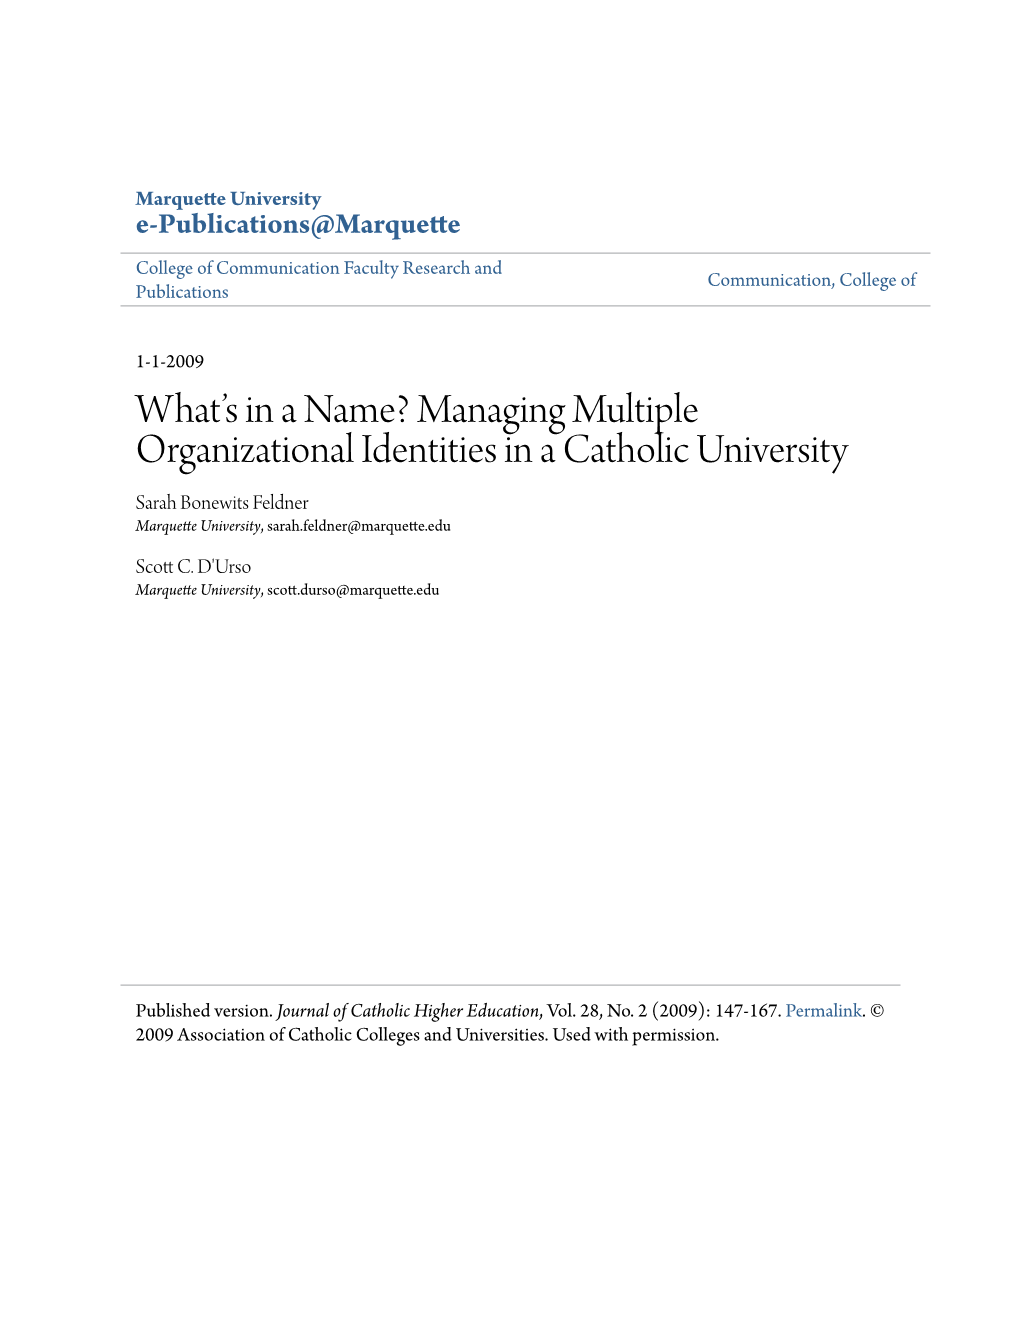 Managing Multiple Organizational Identities in a Catholic University Sarah Bonewits Feldner Marquette University, Sarah.Feldner@Marquette.Edu